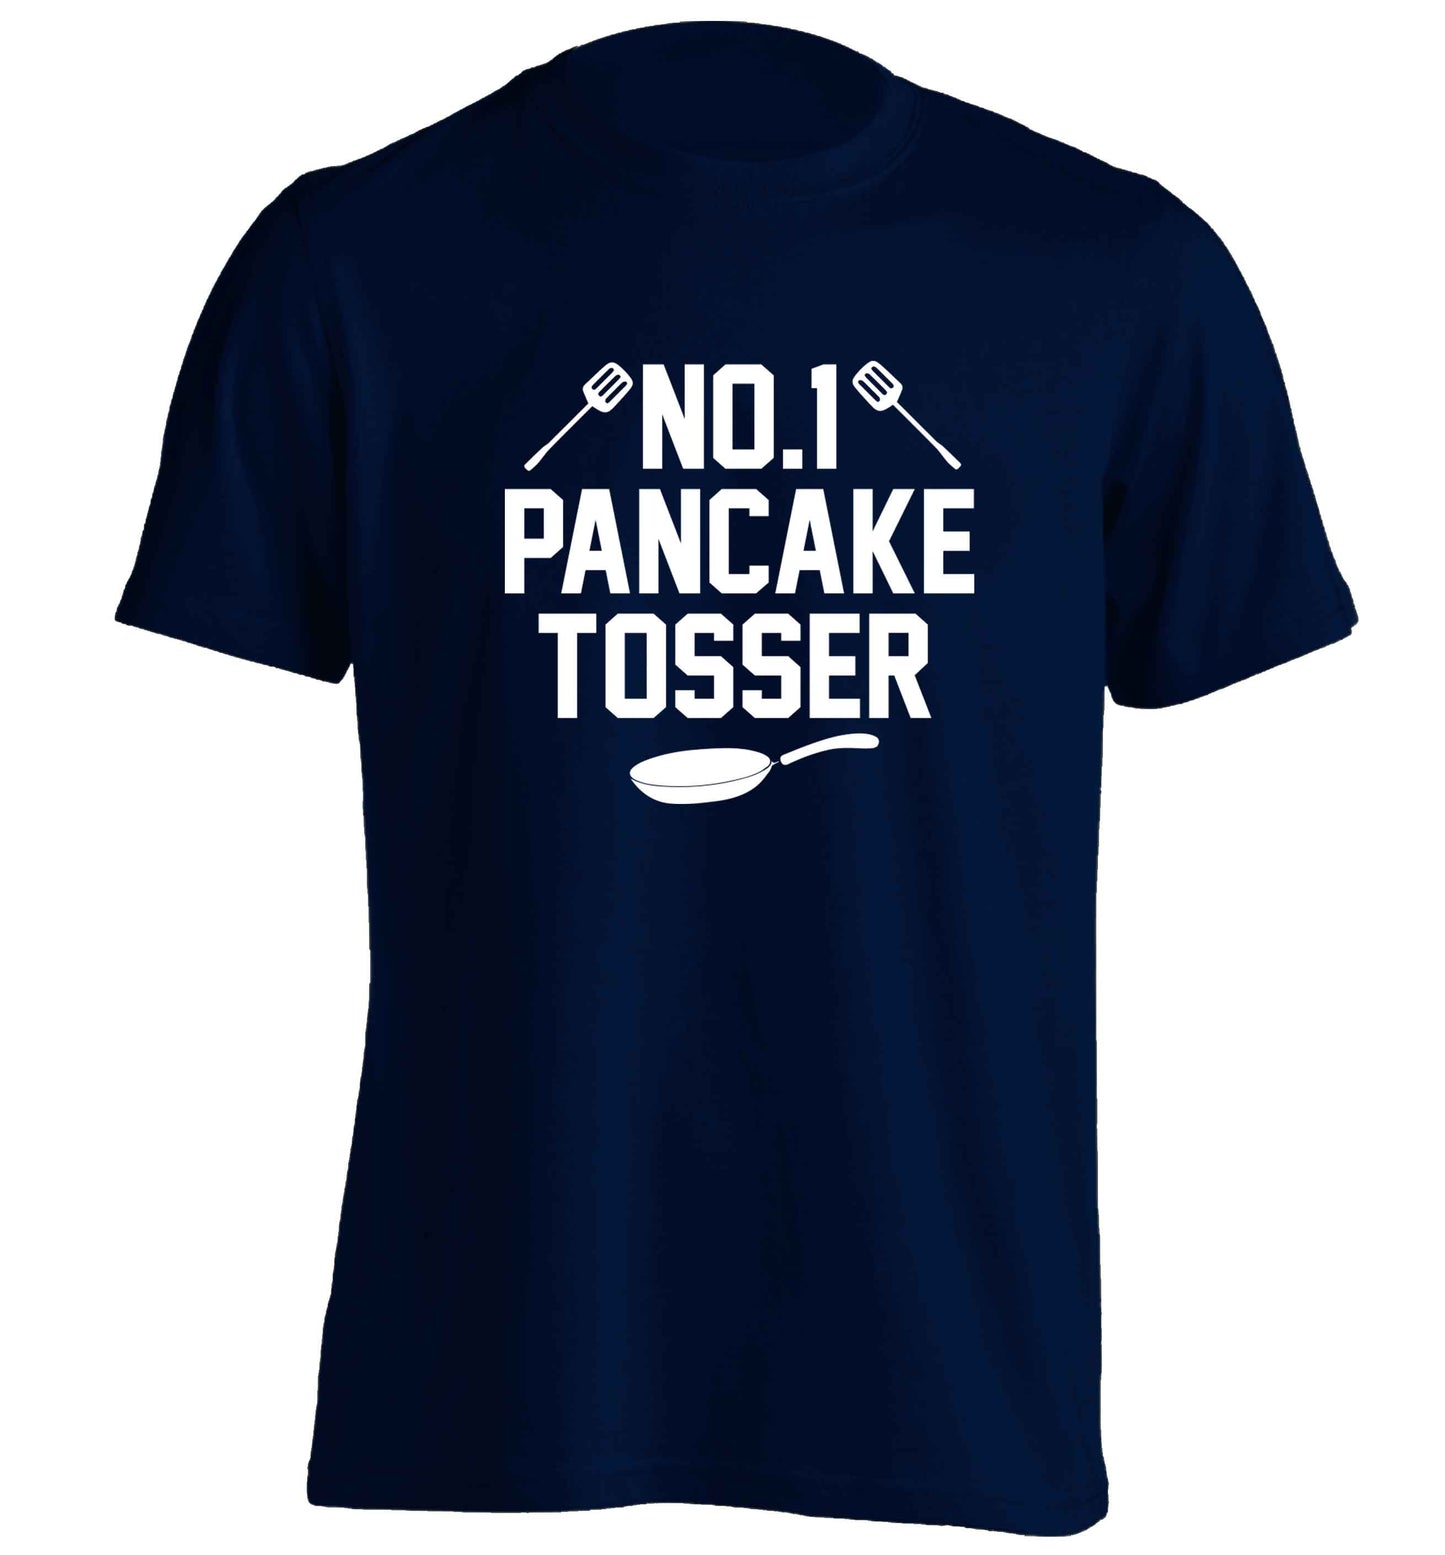 No.1 Pancake tosser adults unisex navy Tshirt 2XL